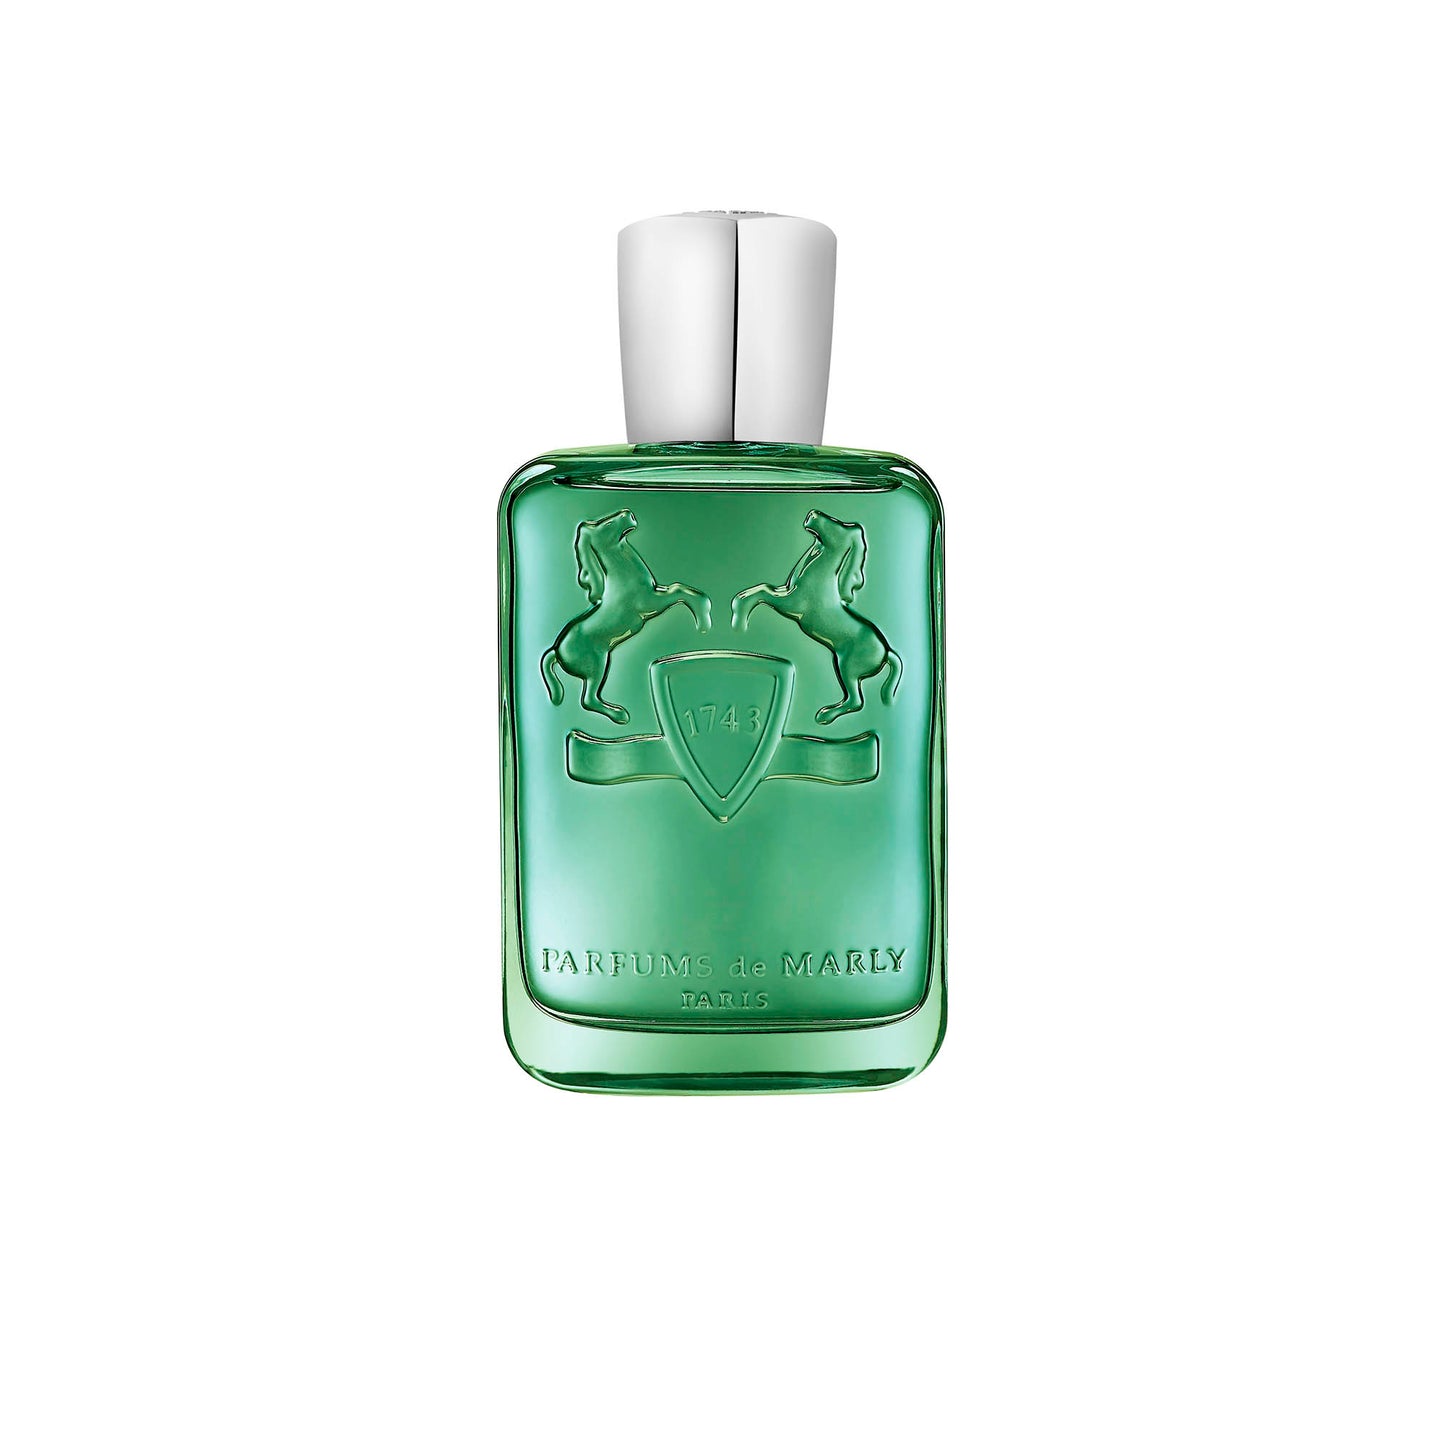 GREENLEY 1.2ml Sample Vial - Eau de Parfum